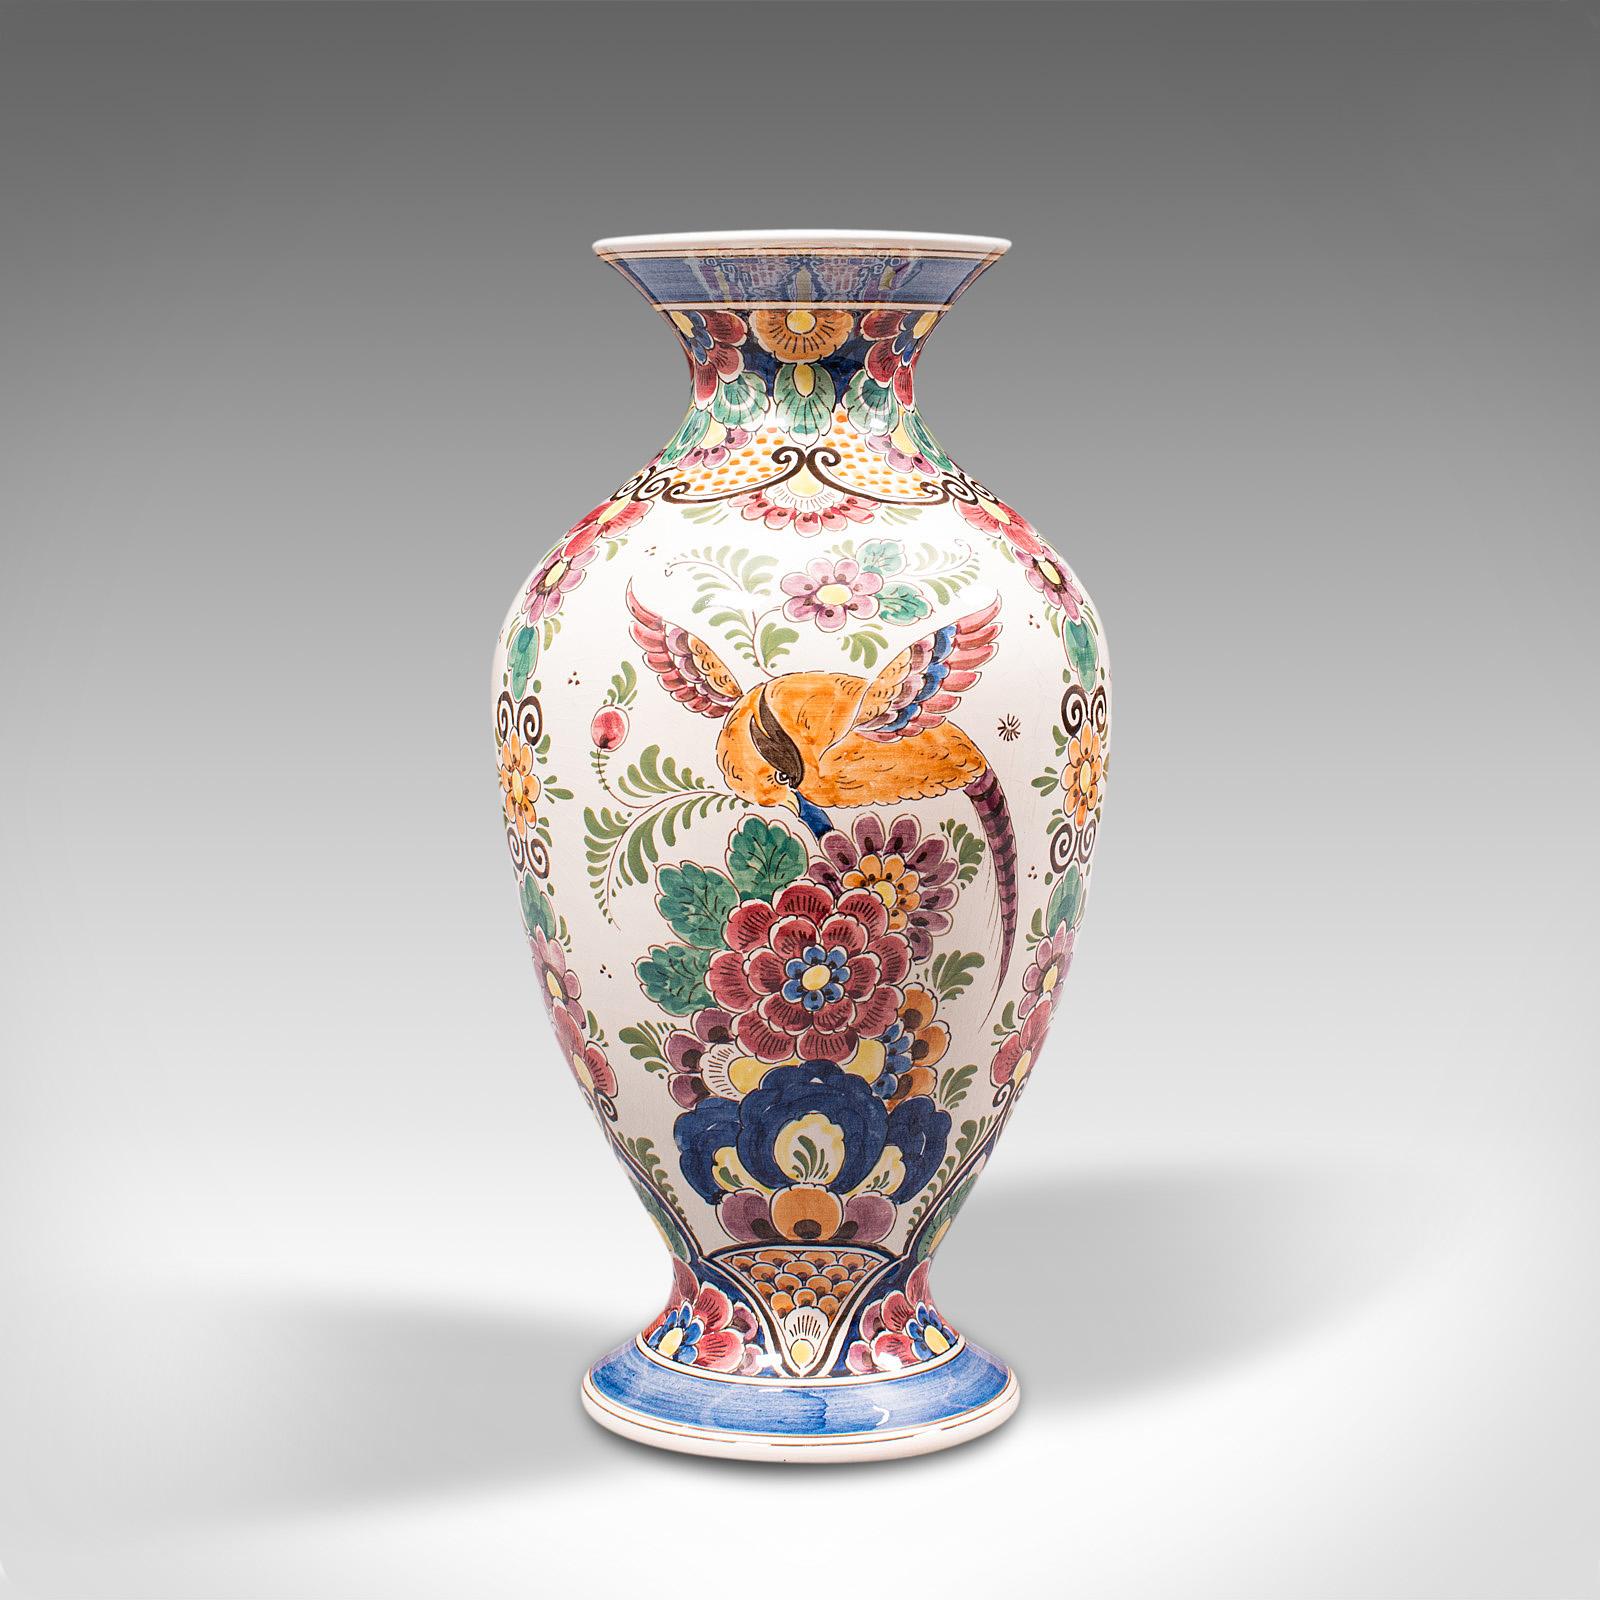 20th Century Vintage Polychromatic Vase, Dutch, Delft, Ceramic, Ornament, Mid 20th.C, C.1960 For Sale